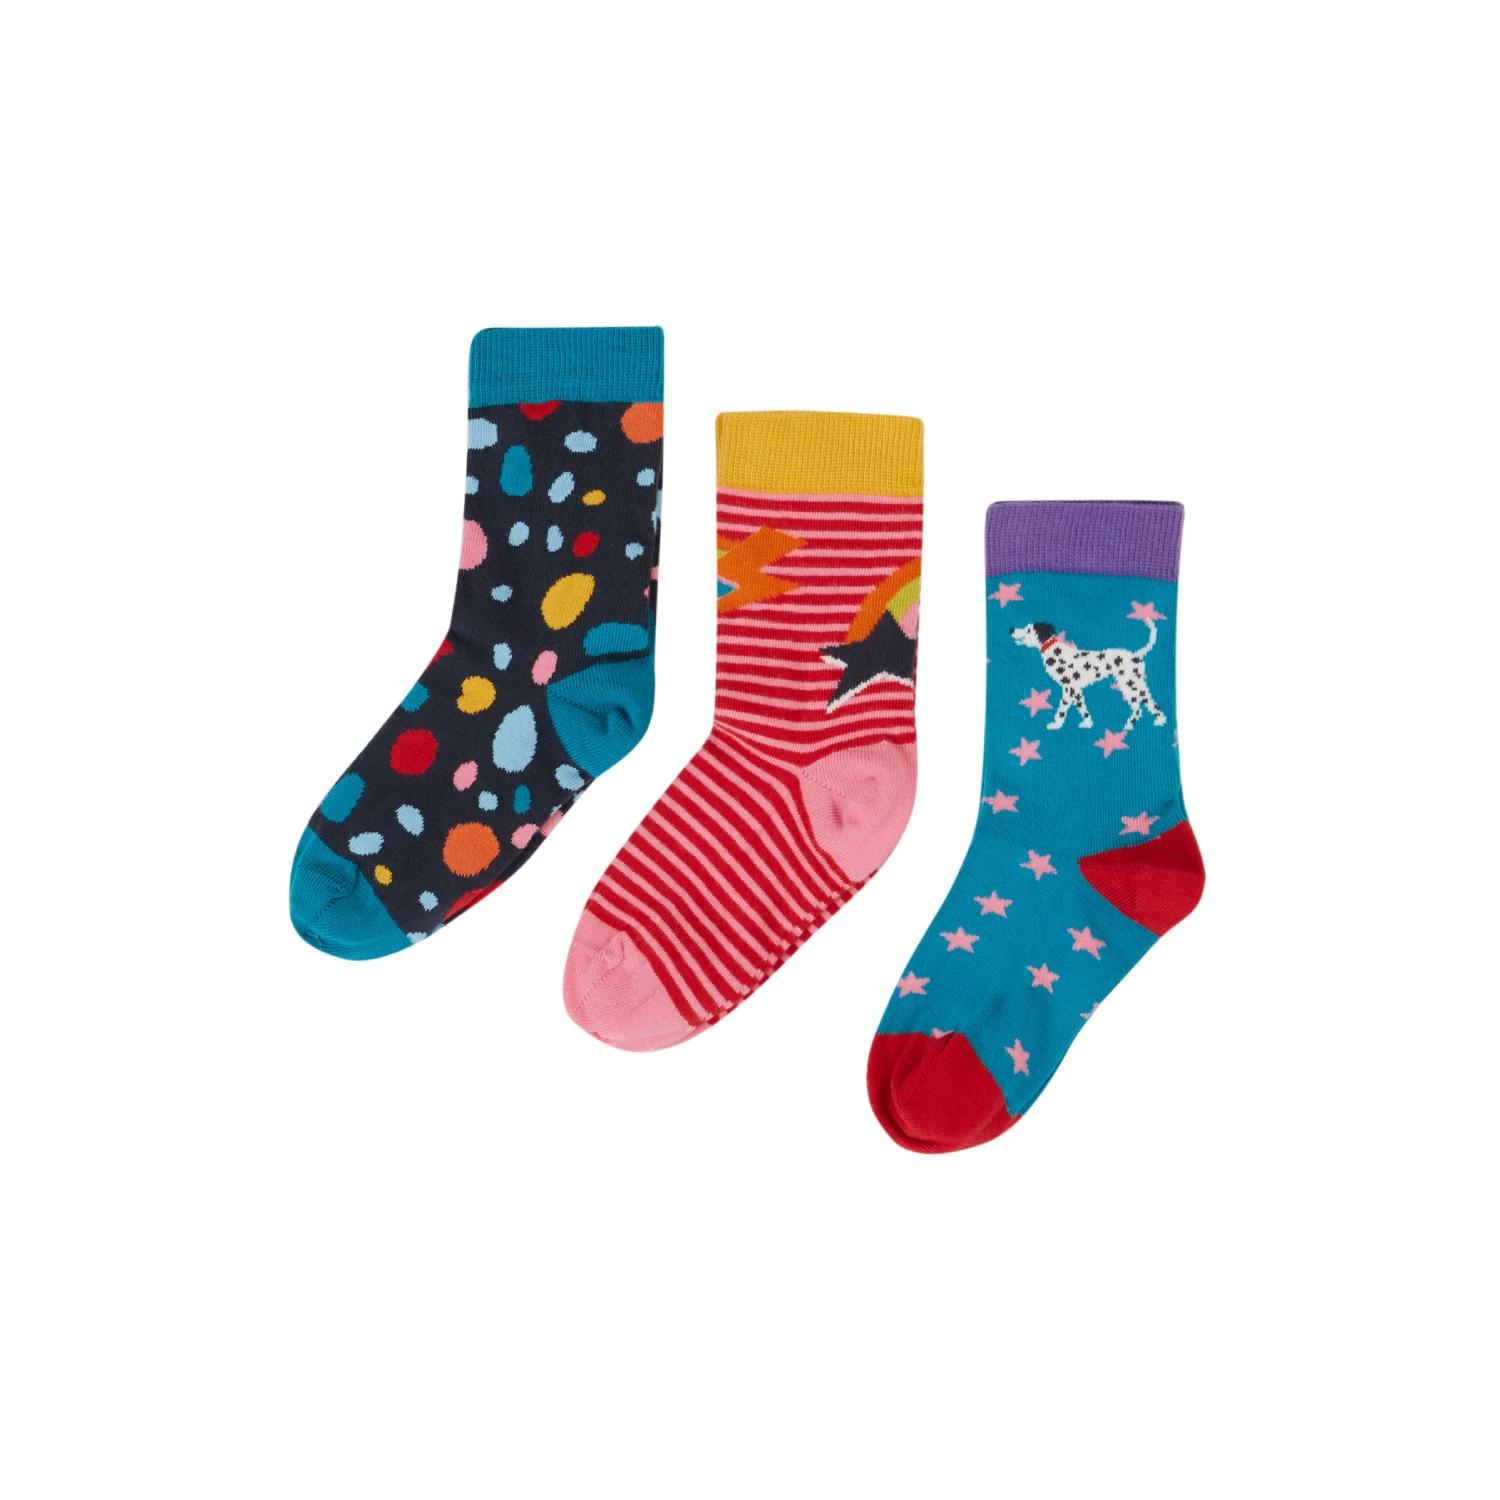 Rock my socks dalamatian spots 3 pack by Frugi